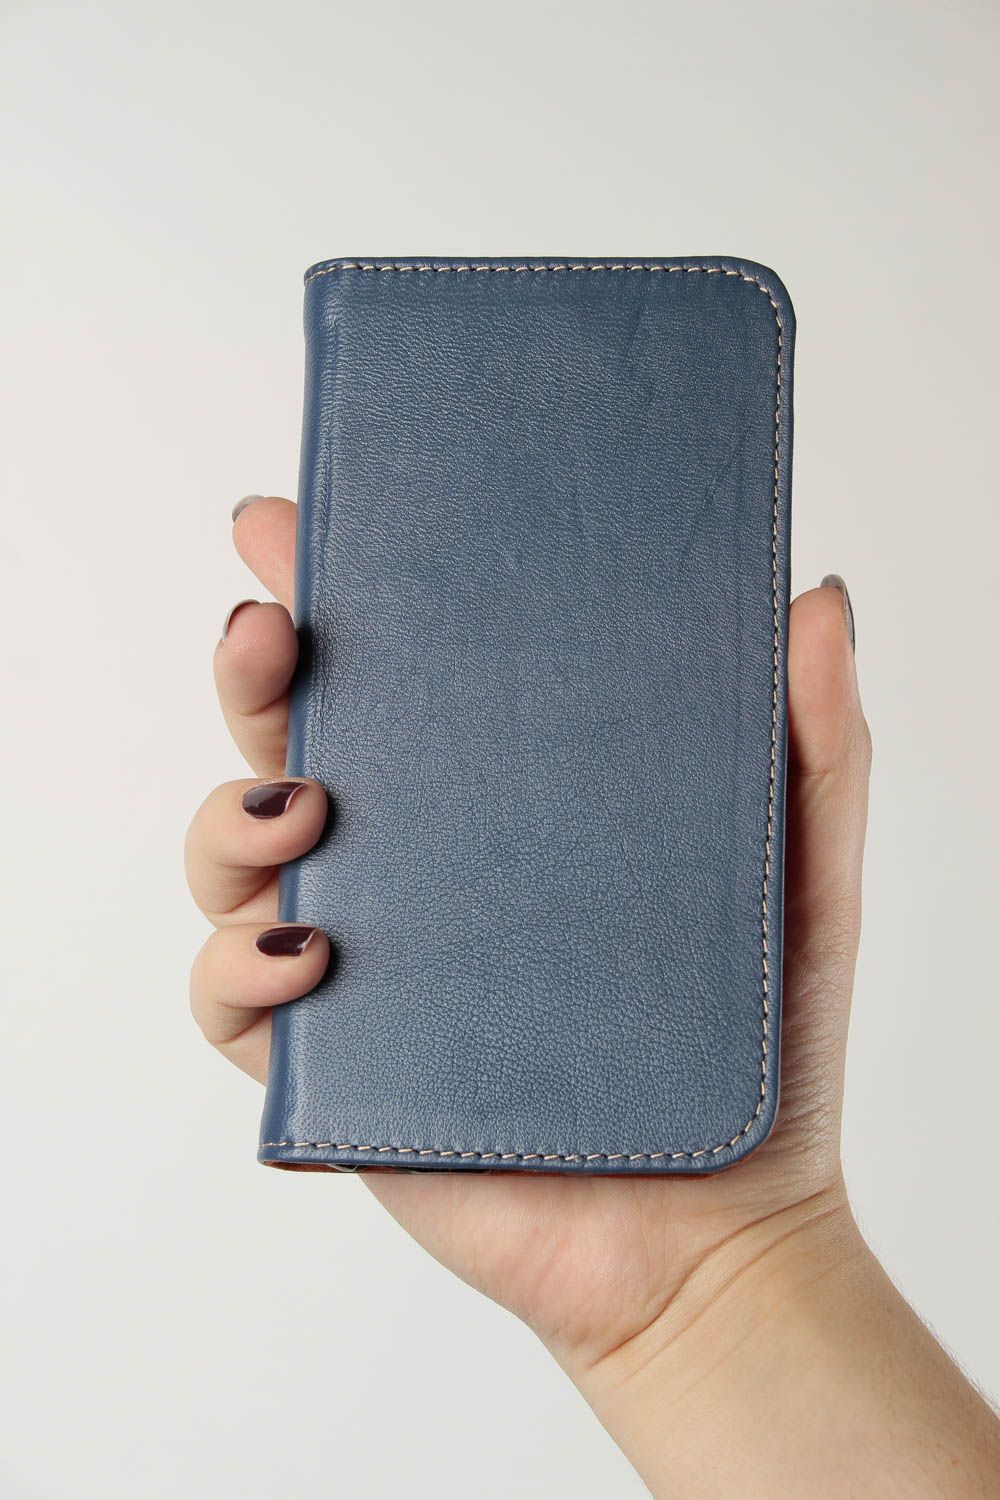 Beautiful handmade phone case leather goods designer gadget accessories photo 1